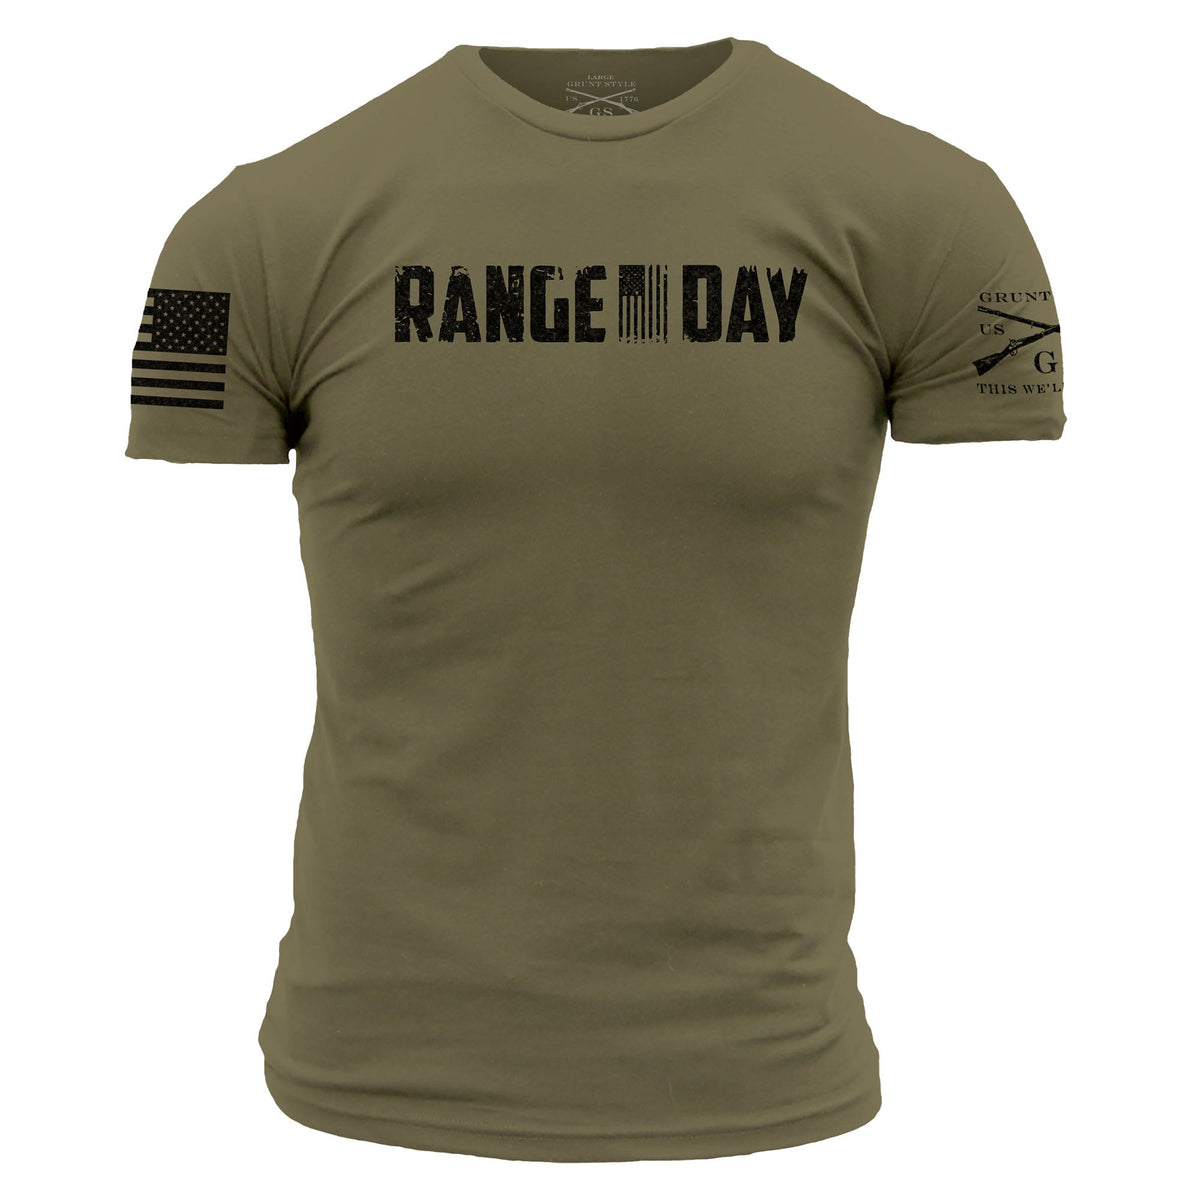 Range Day